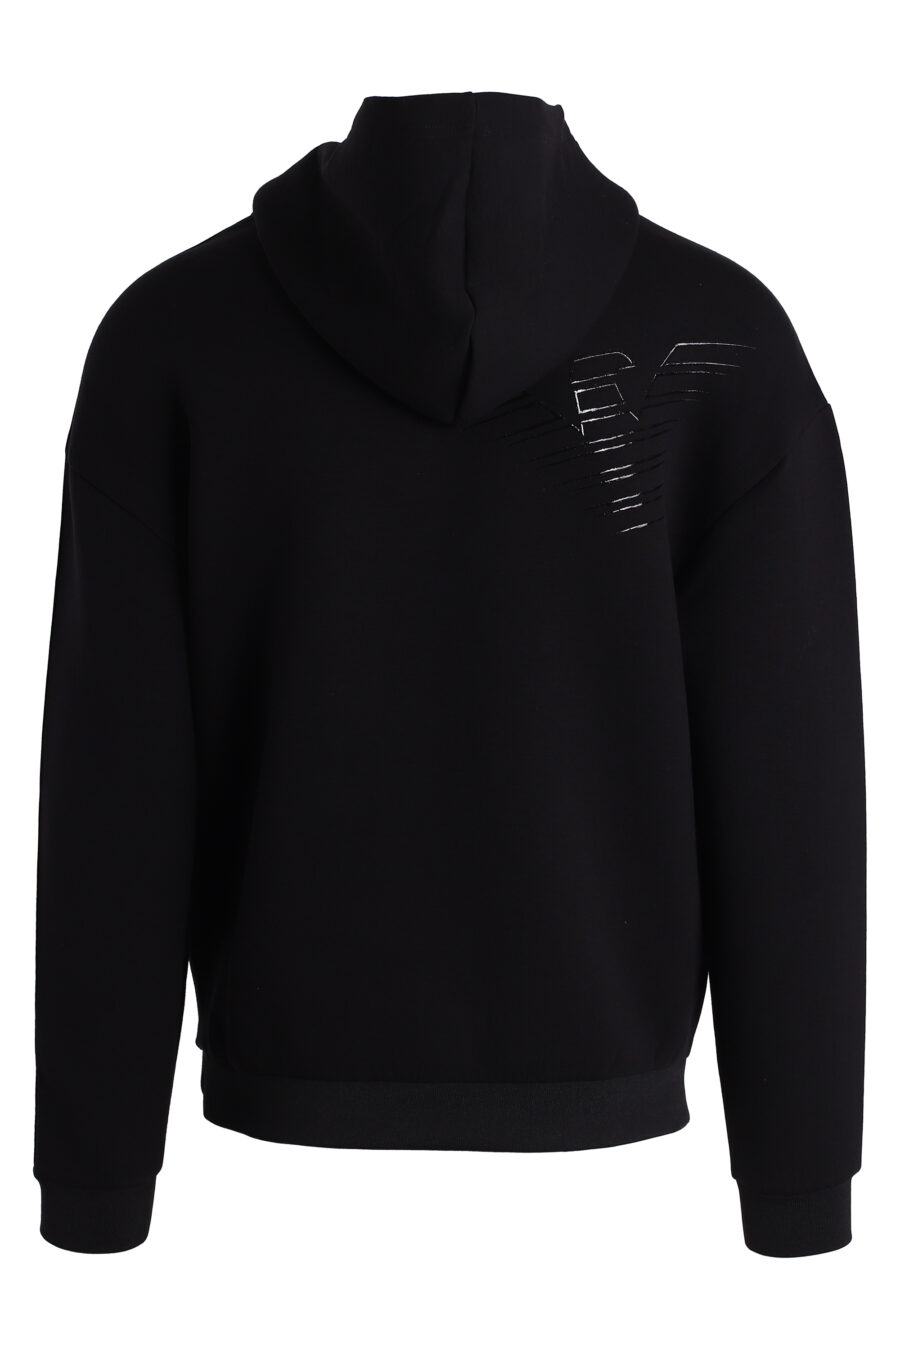 Black hooded sweatshirt with shiny monochrome logo on sleeves - IMG 4750